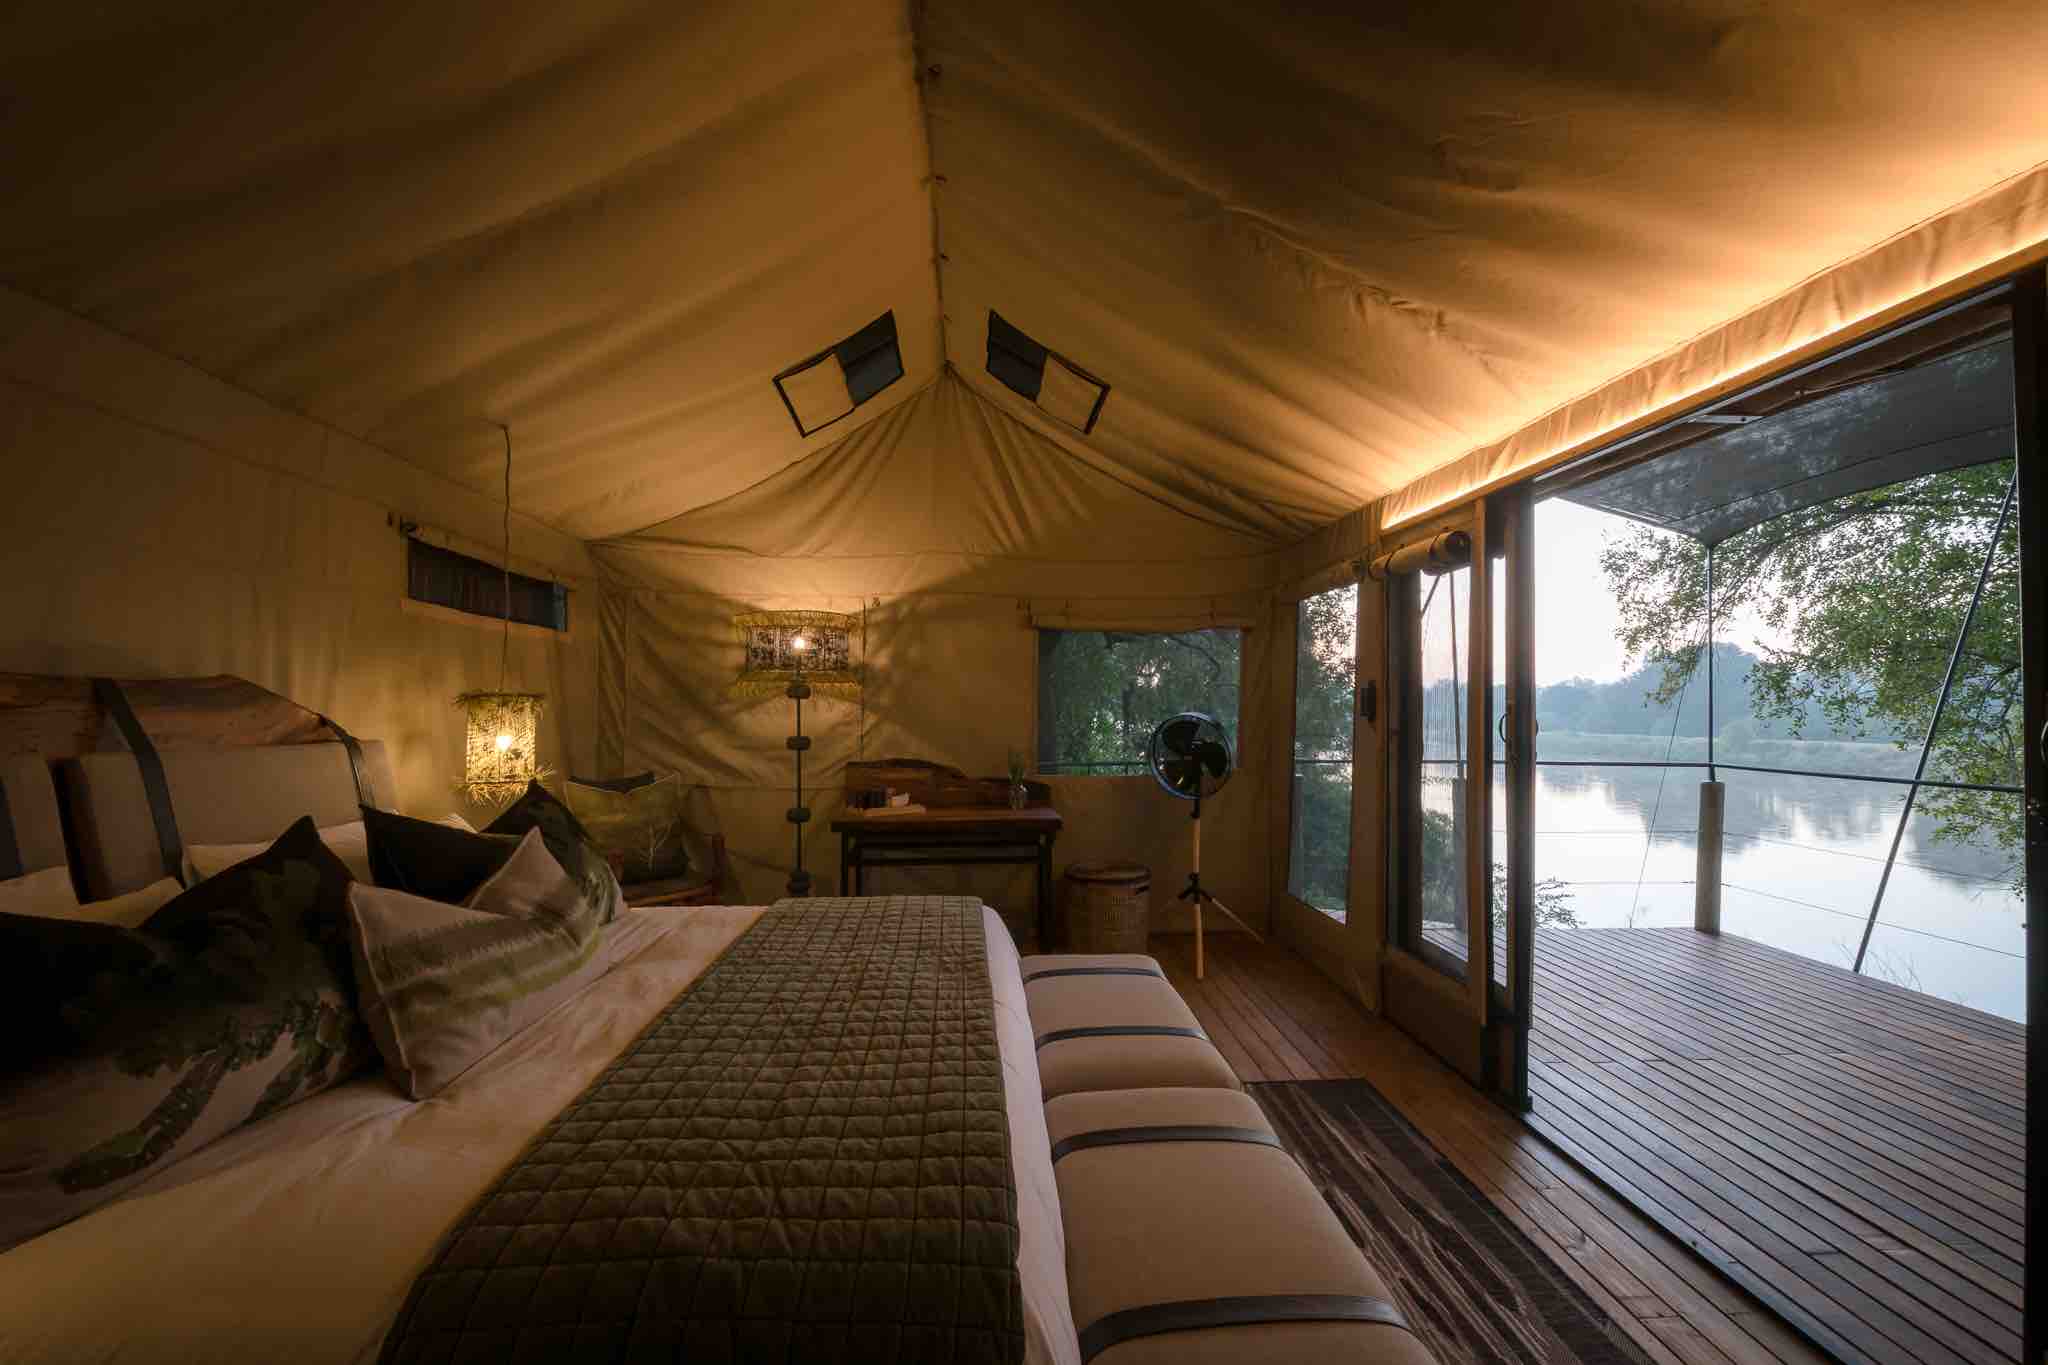 Bundox River Lodge Tented Camp